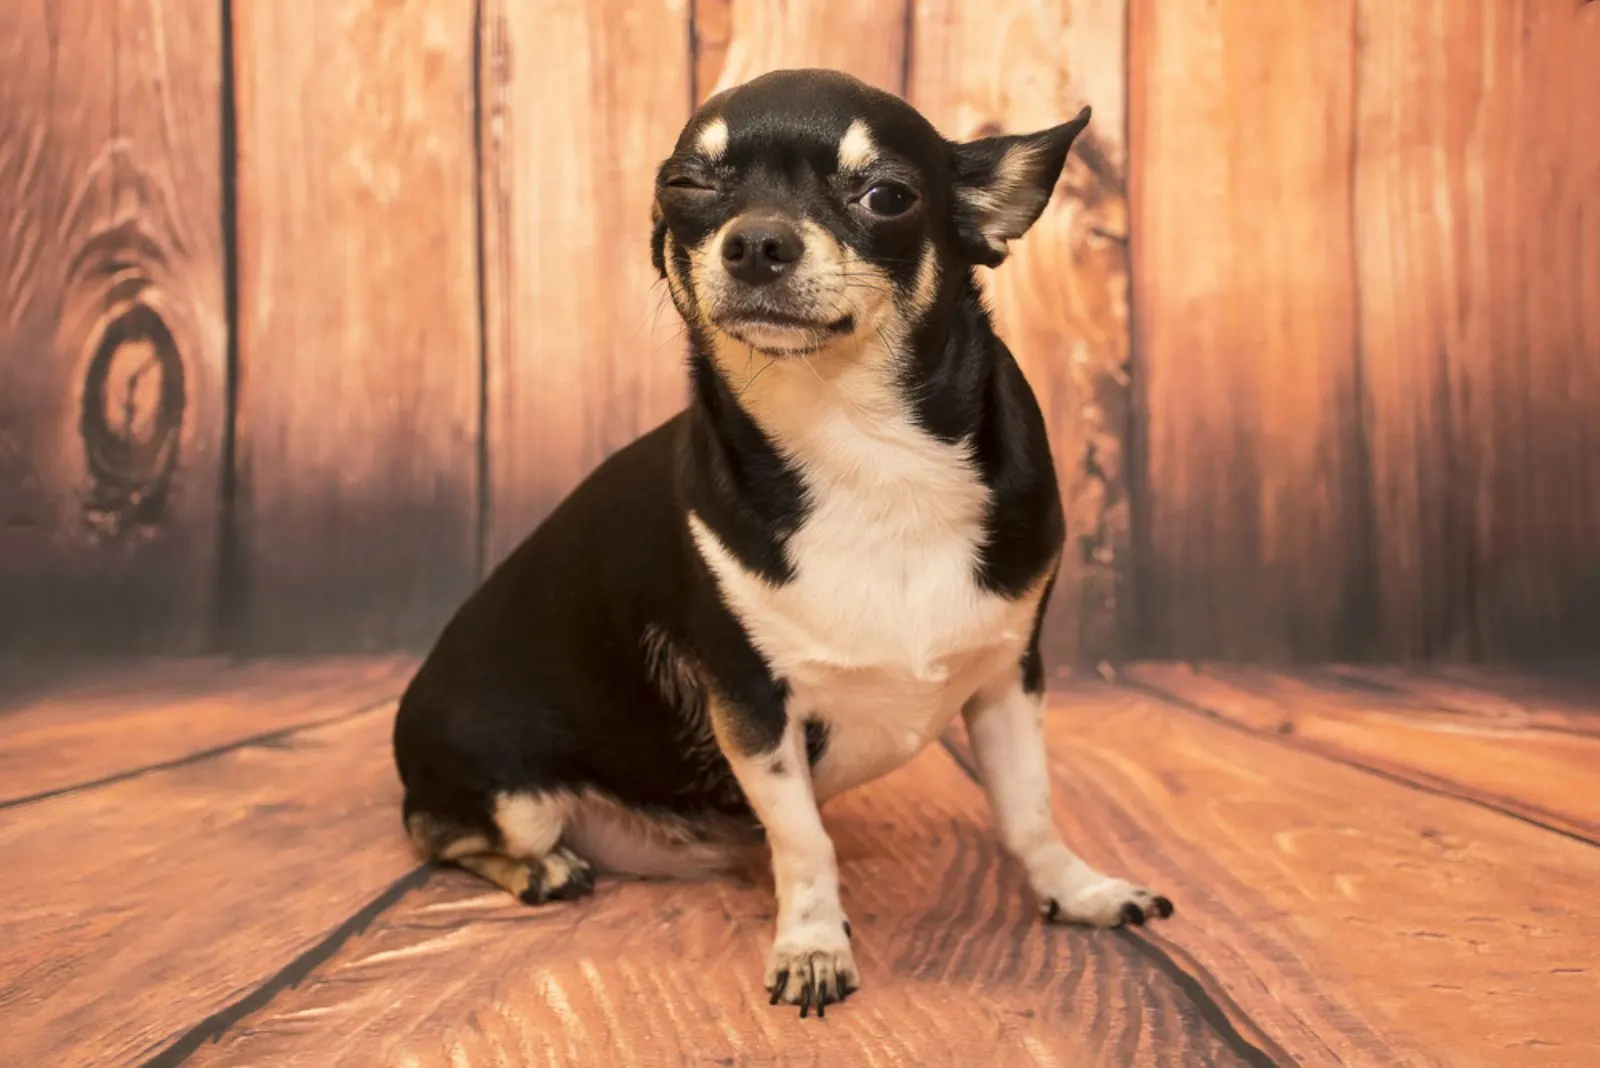 Chihuahua dog winks